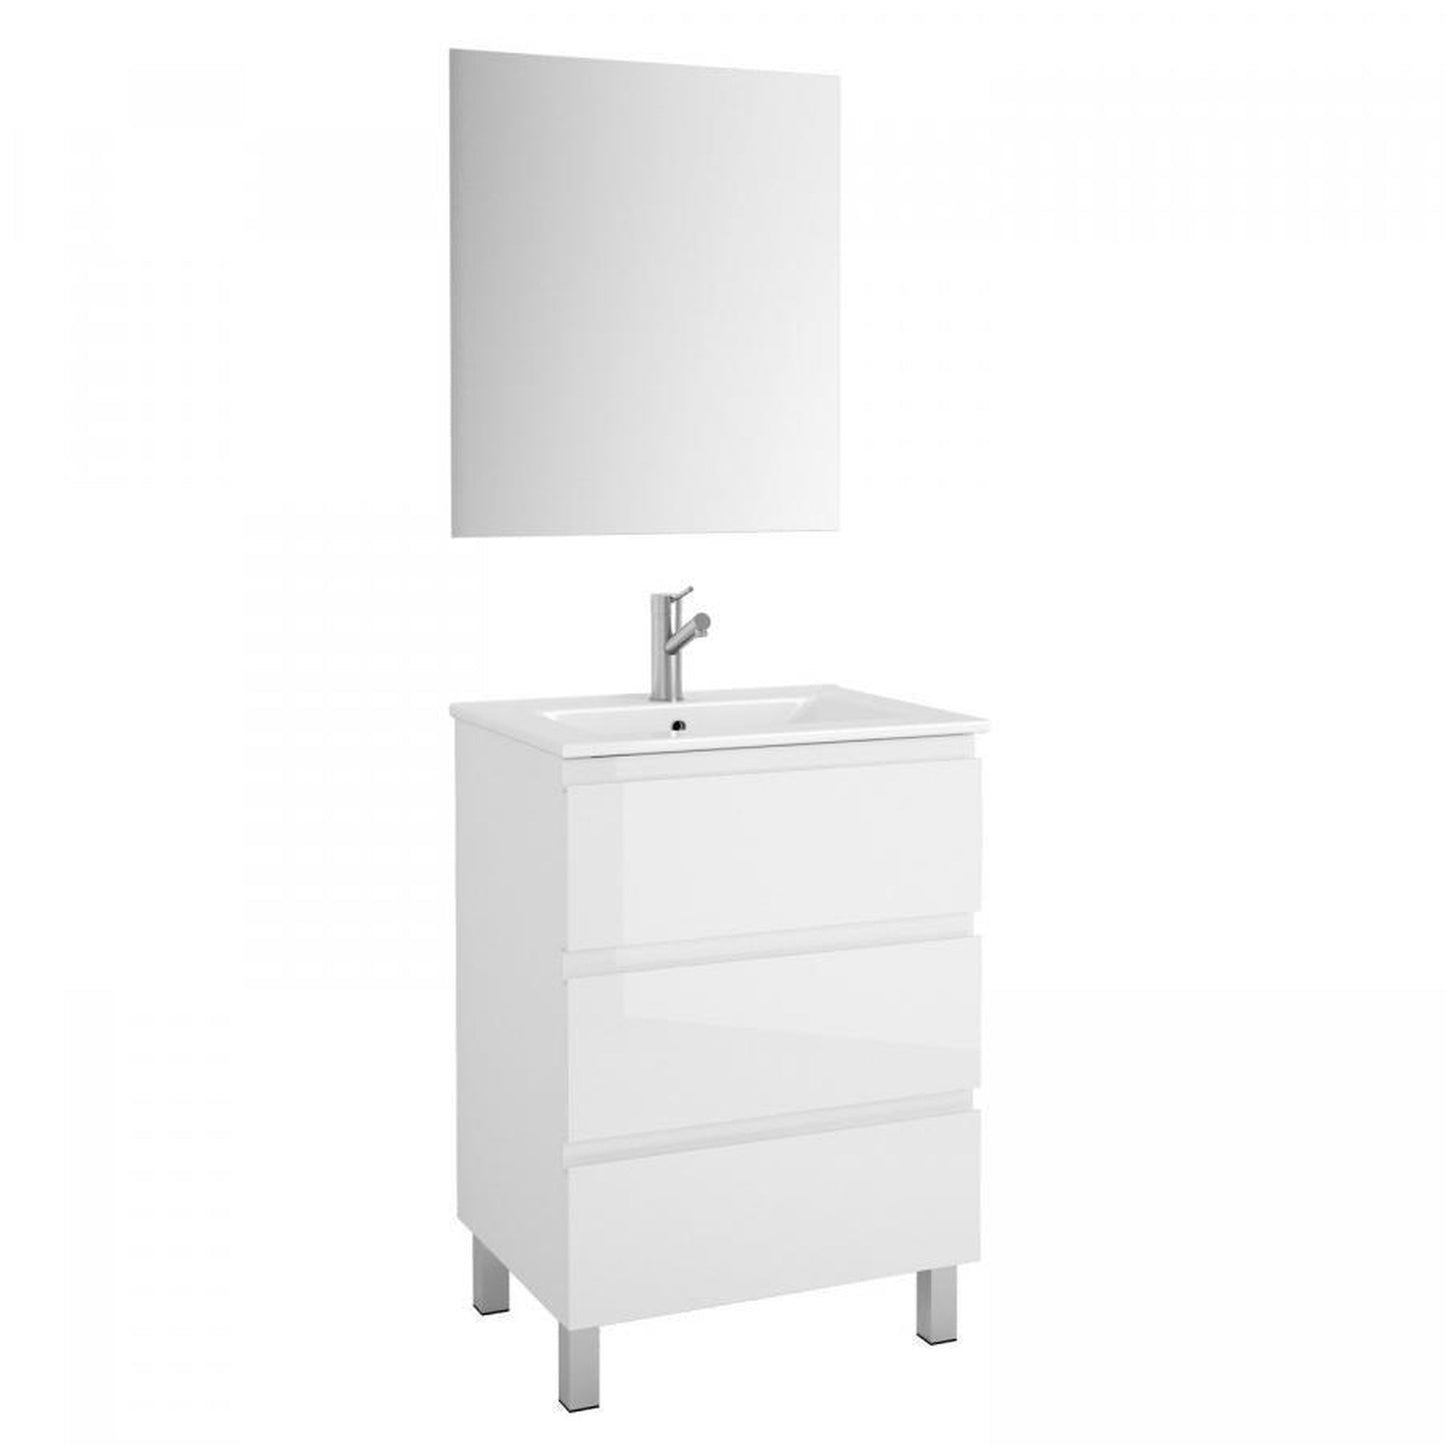 Eviva Vigo 24" x 34" White Freestanding Bathroom Vanity With White Integrated Porcelain Sink